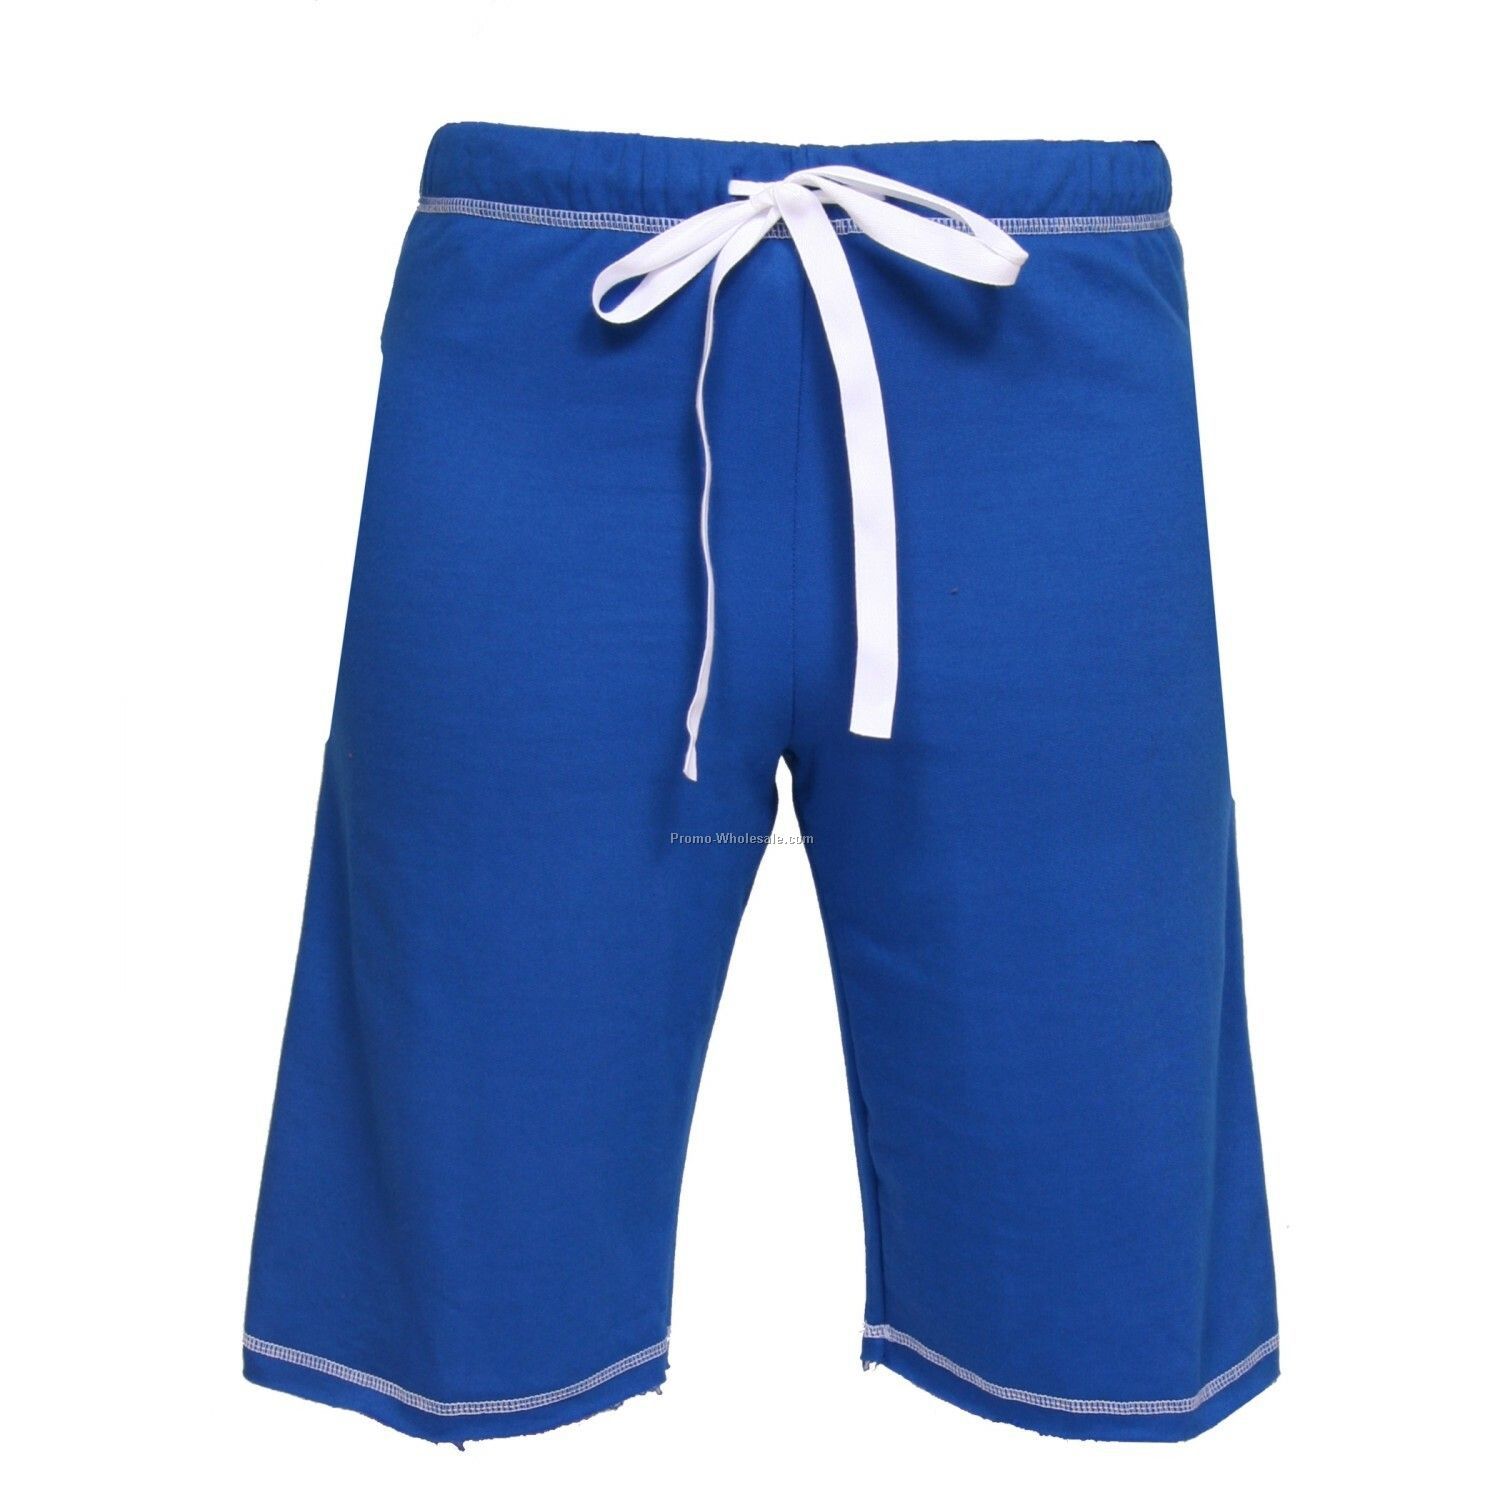 Adults' Royal Blue Board Shorts (Xs-xl)